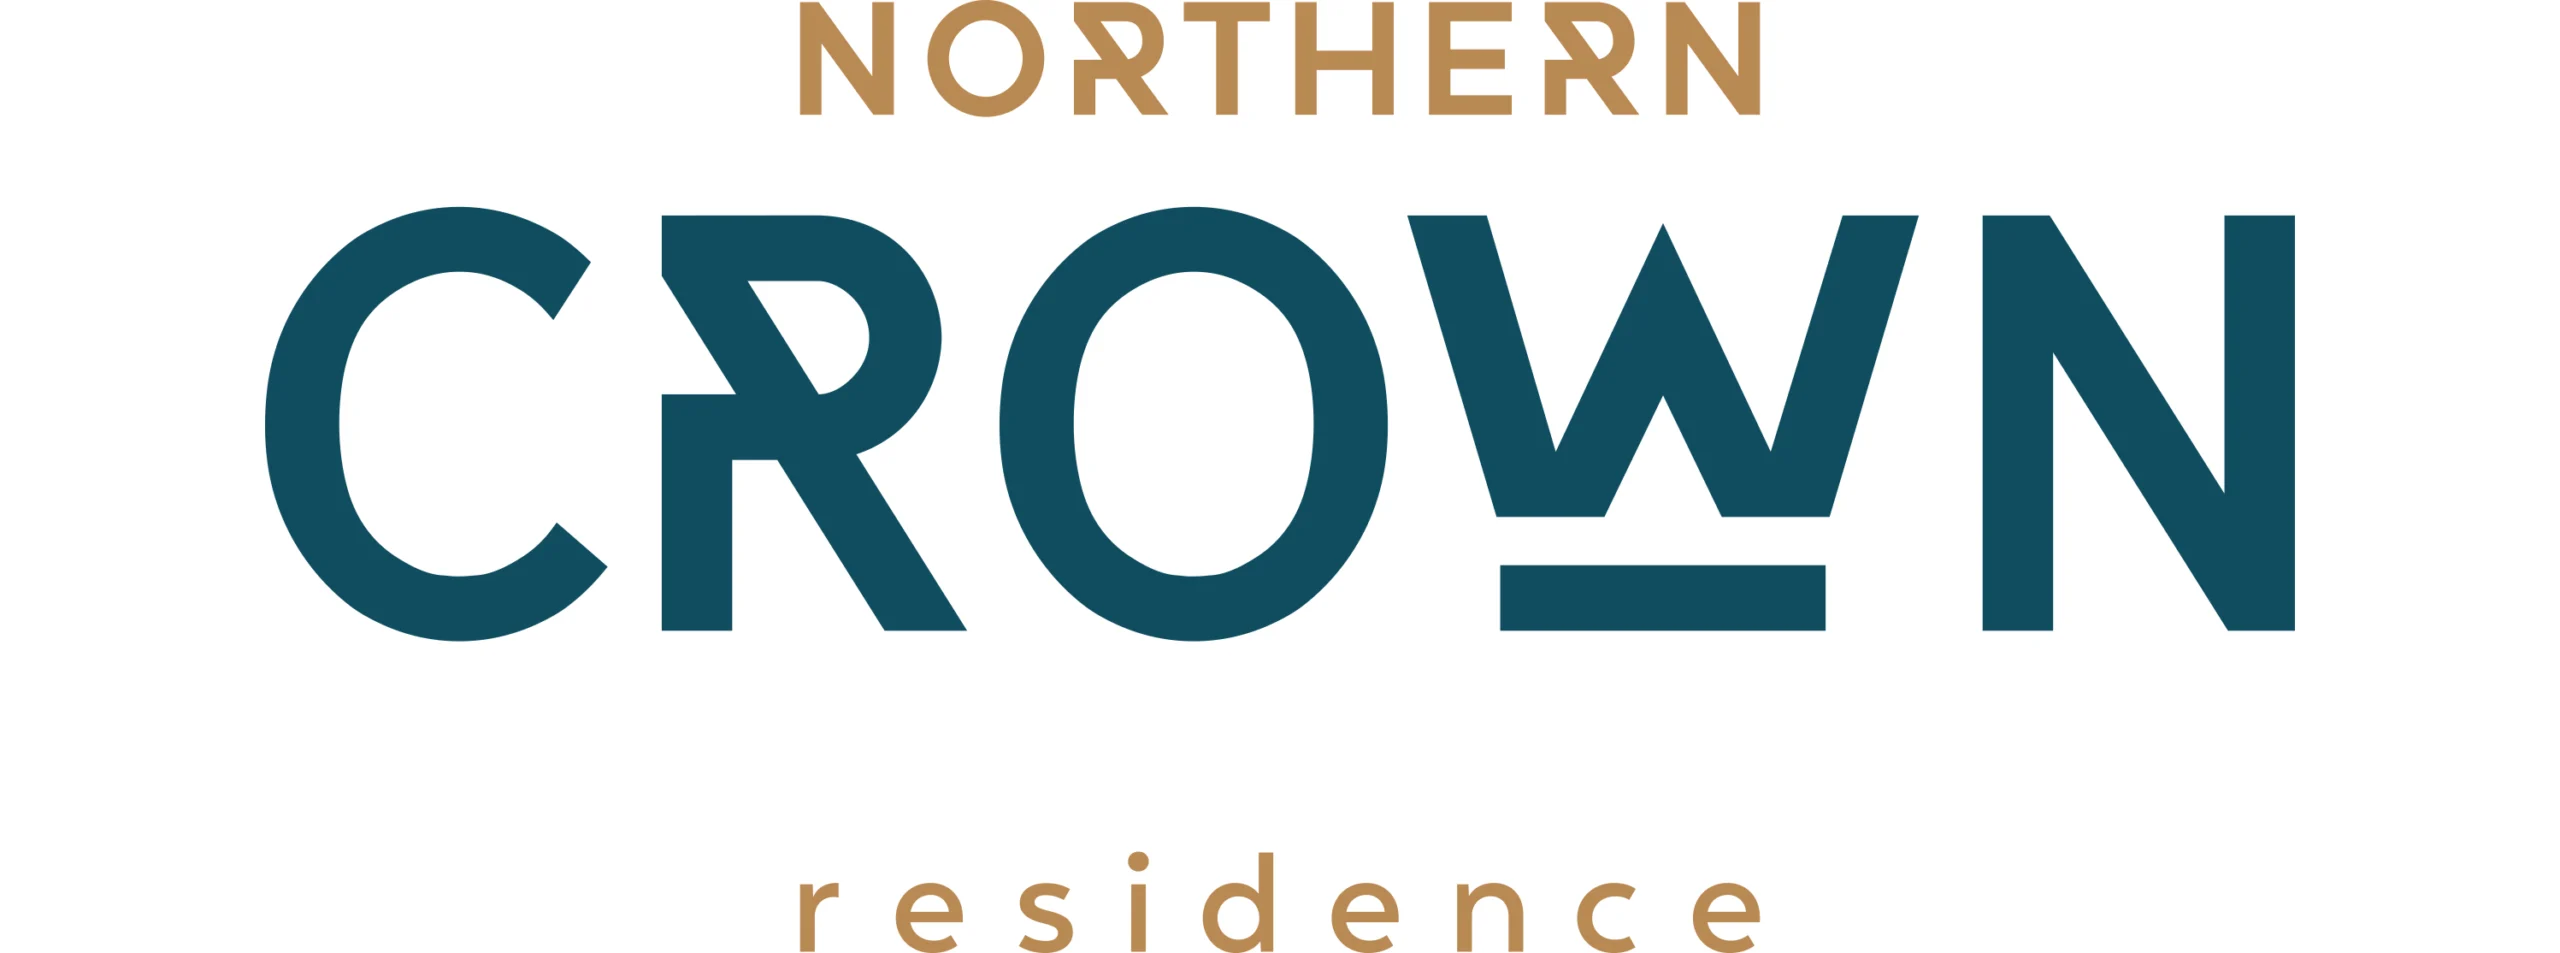 Northern Crown Residence Logo